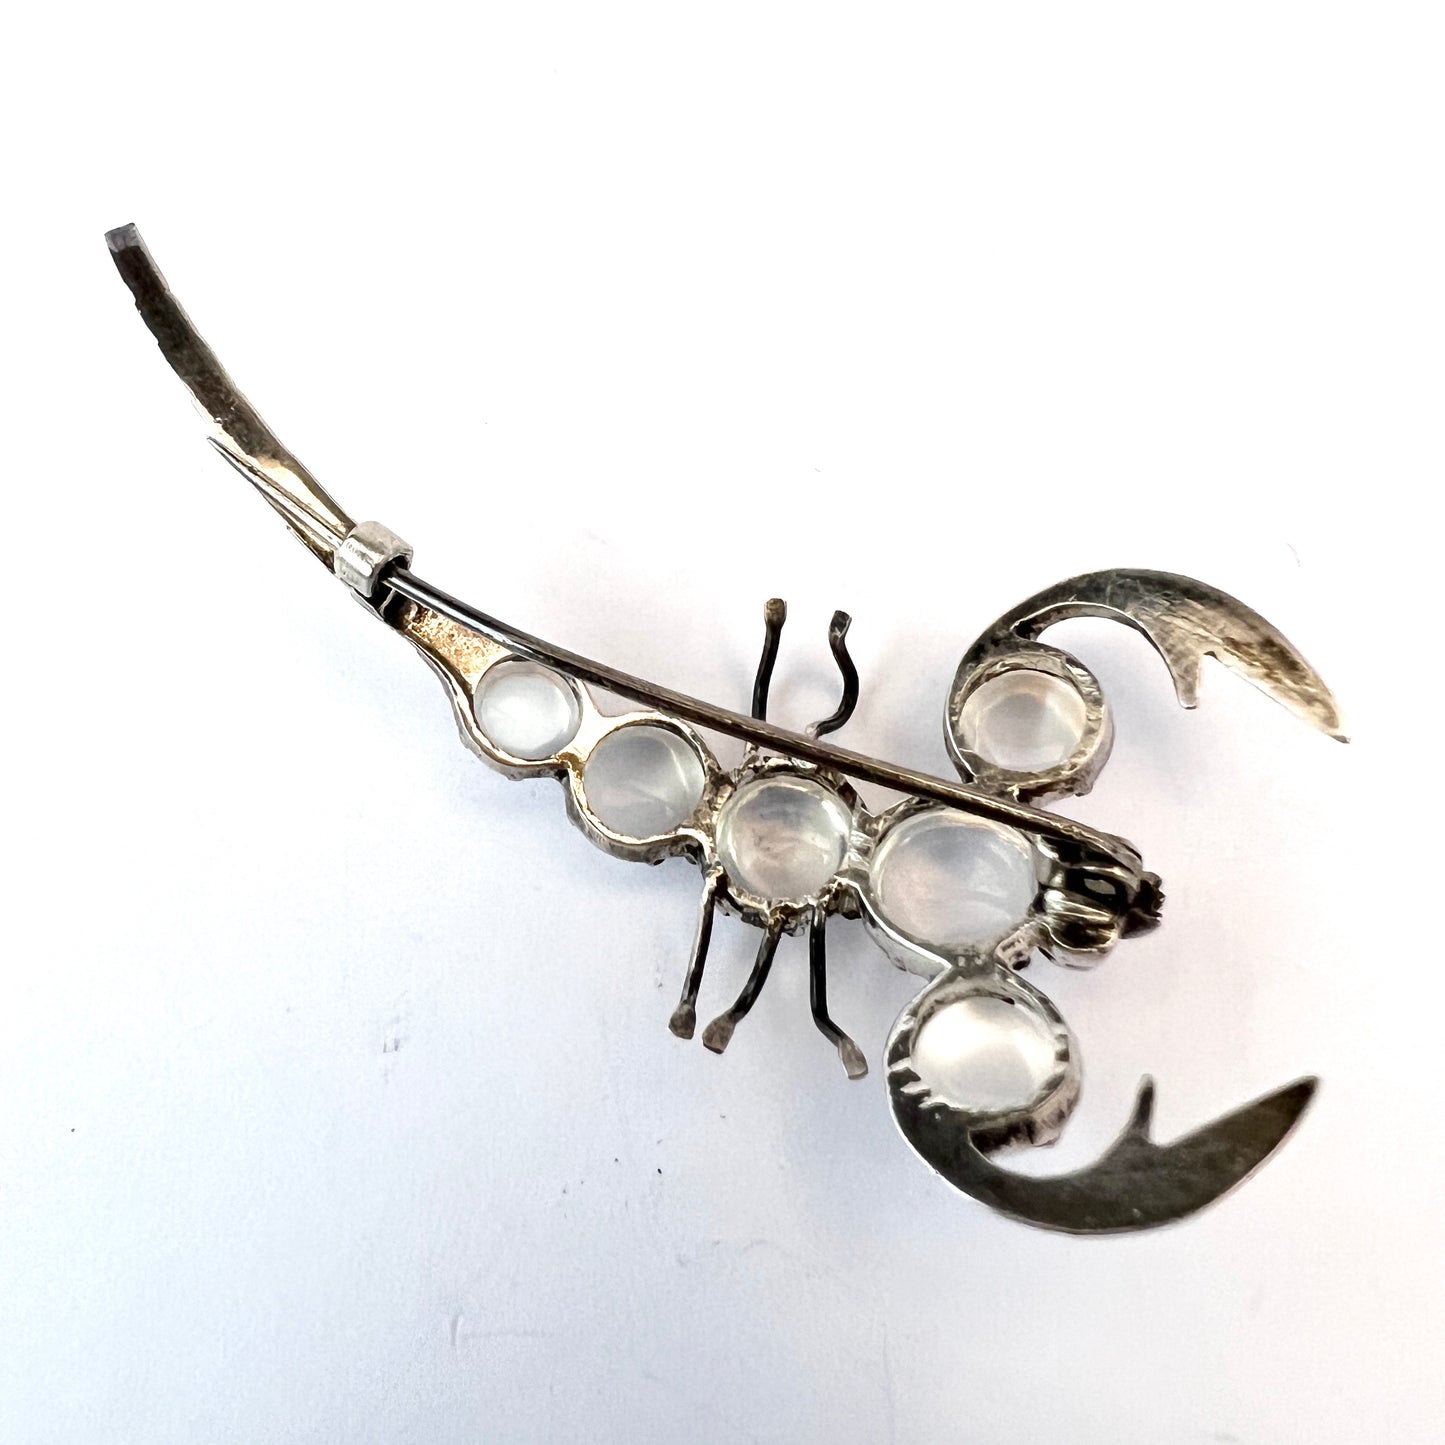 Antique or Vintage Sterling Silver Moonstone Scorpion Brooch.